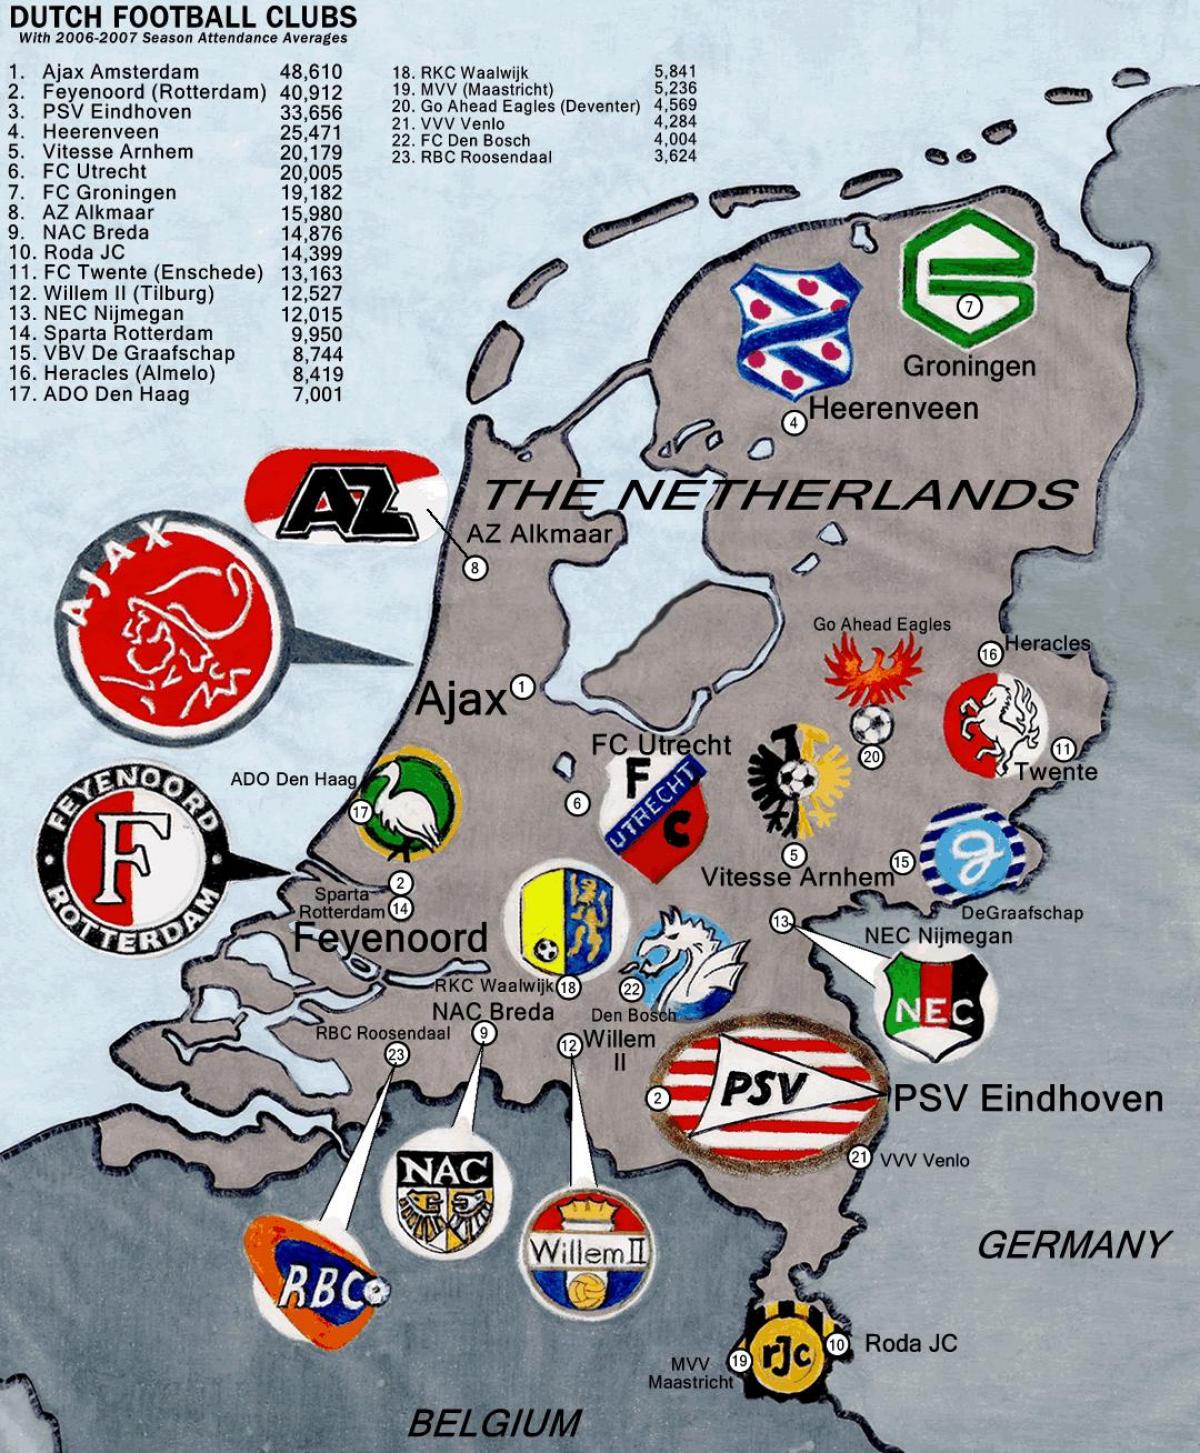 stadiums map of Netherlands